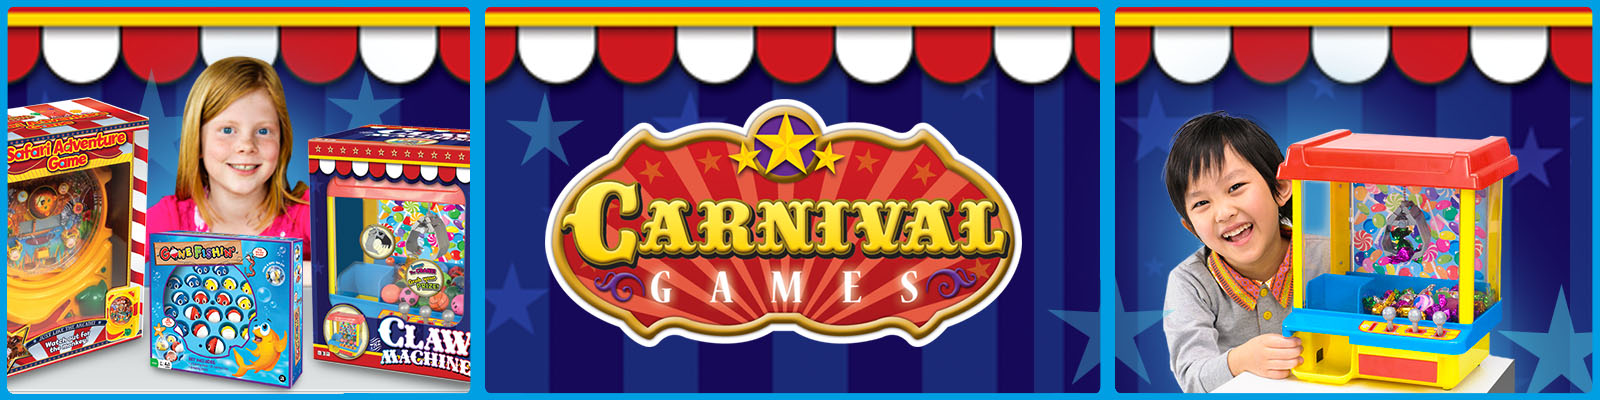 Carnavalspellen